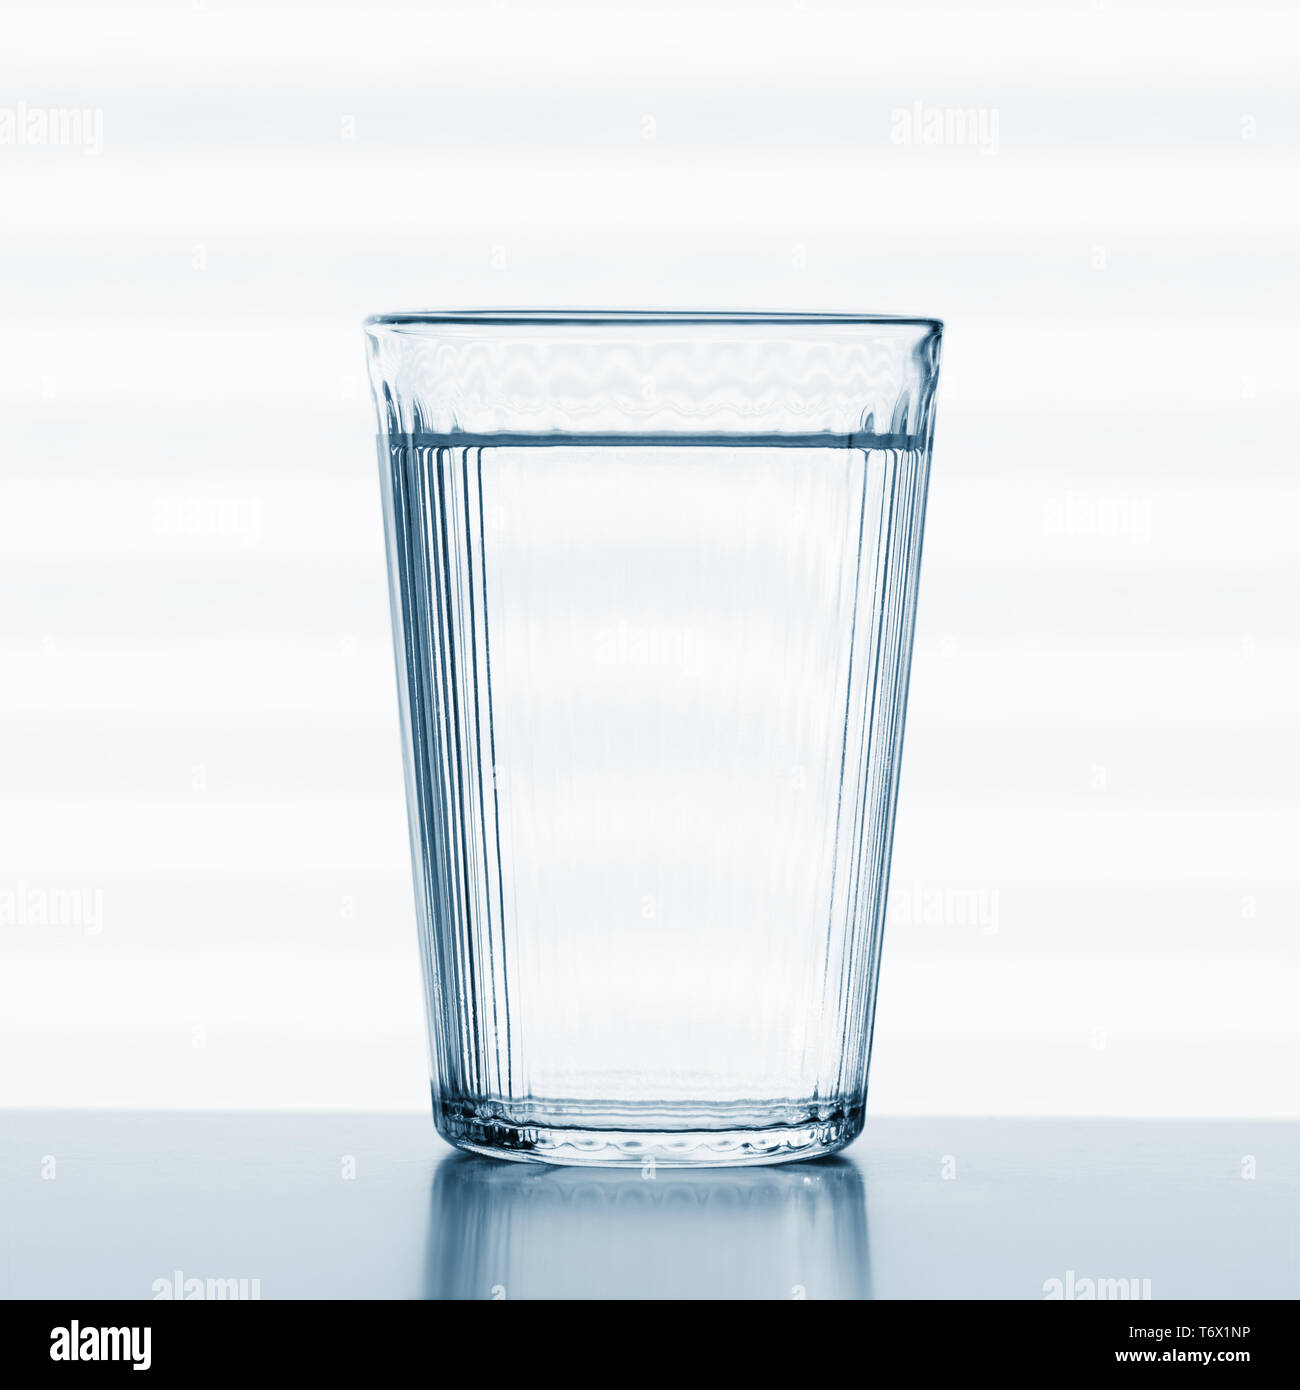 https://c8.alamy.com/comp/T6X1NP/typical-full-water-glass-T6X1NP.jpg